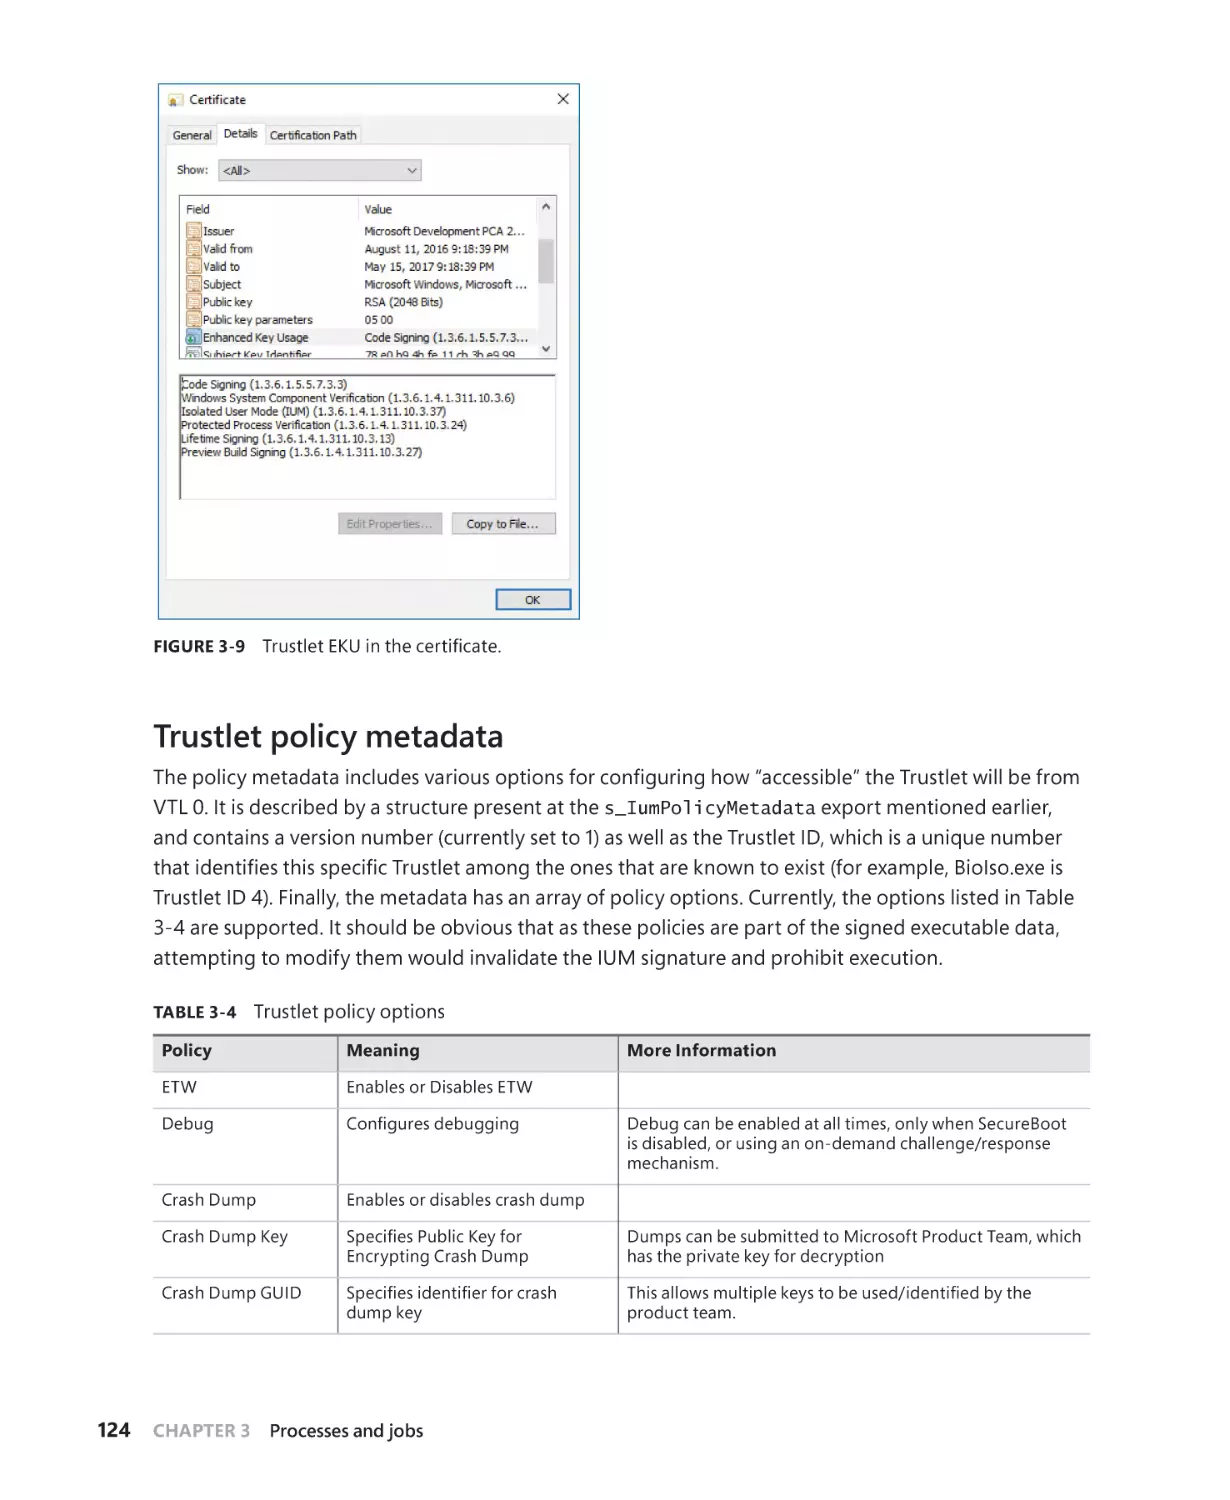 Trustlet policy metadata